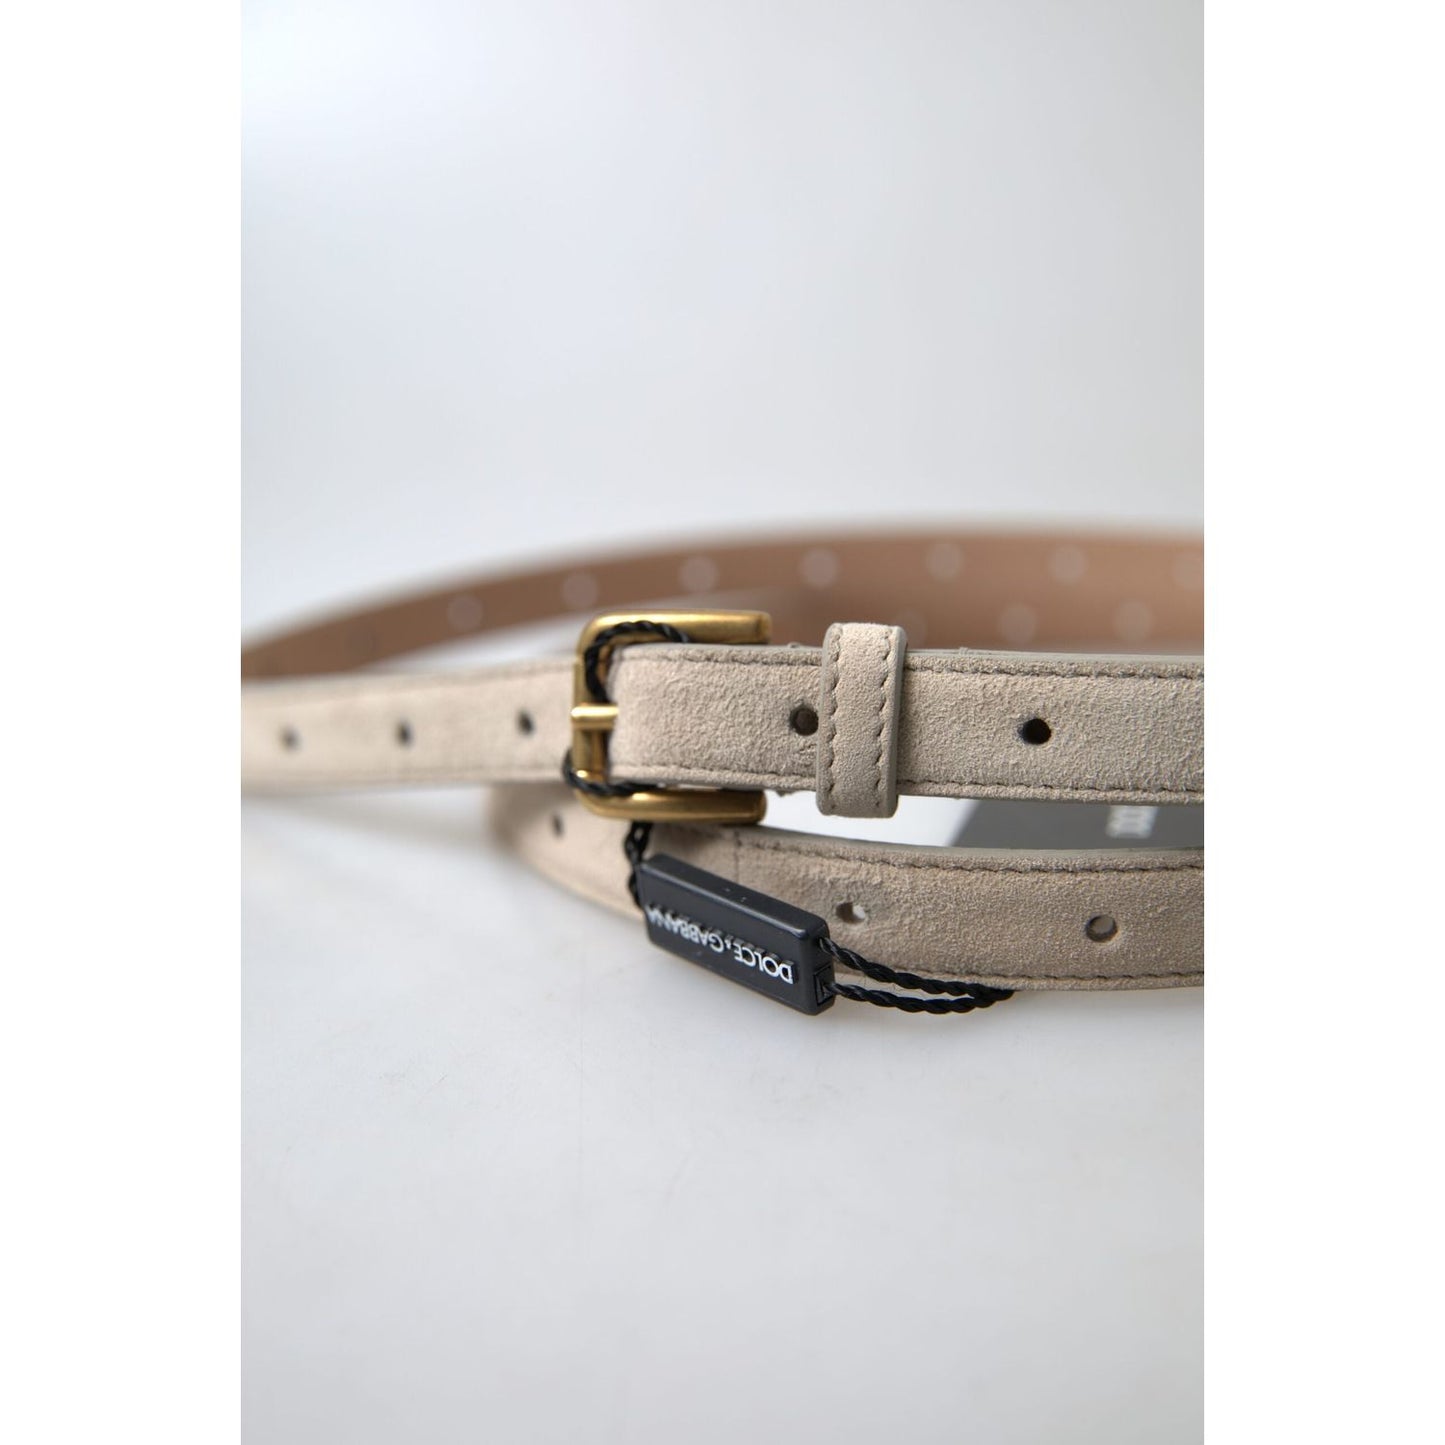 Dolce & Gabbana Elegant Beige Leather Belt with Metal Buckle beige-goatskin-leather-metal-buckle-belt 465A5140-scaled-92a39735-422.jpg